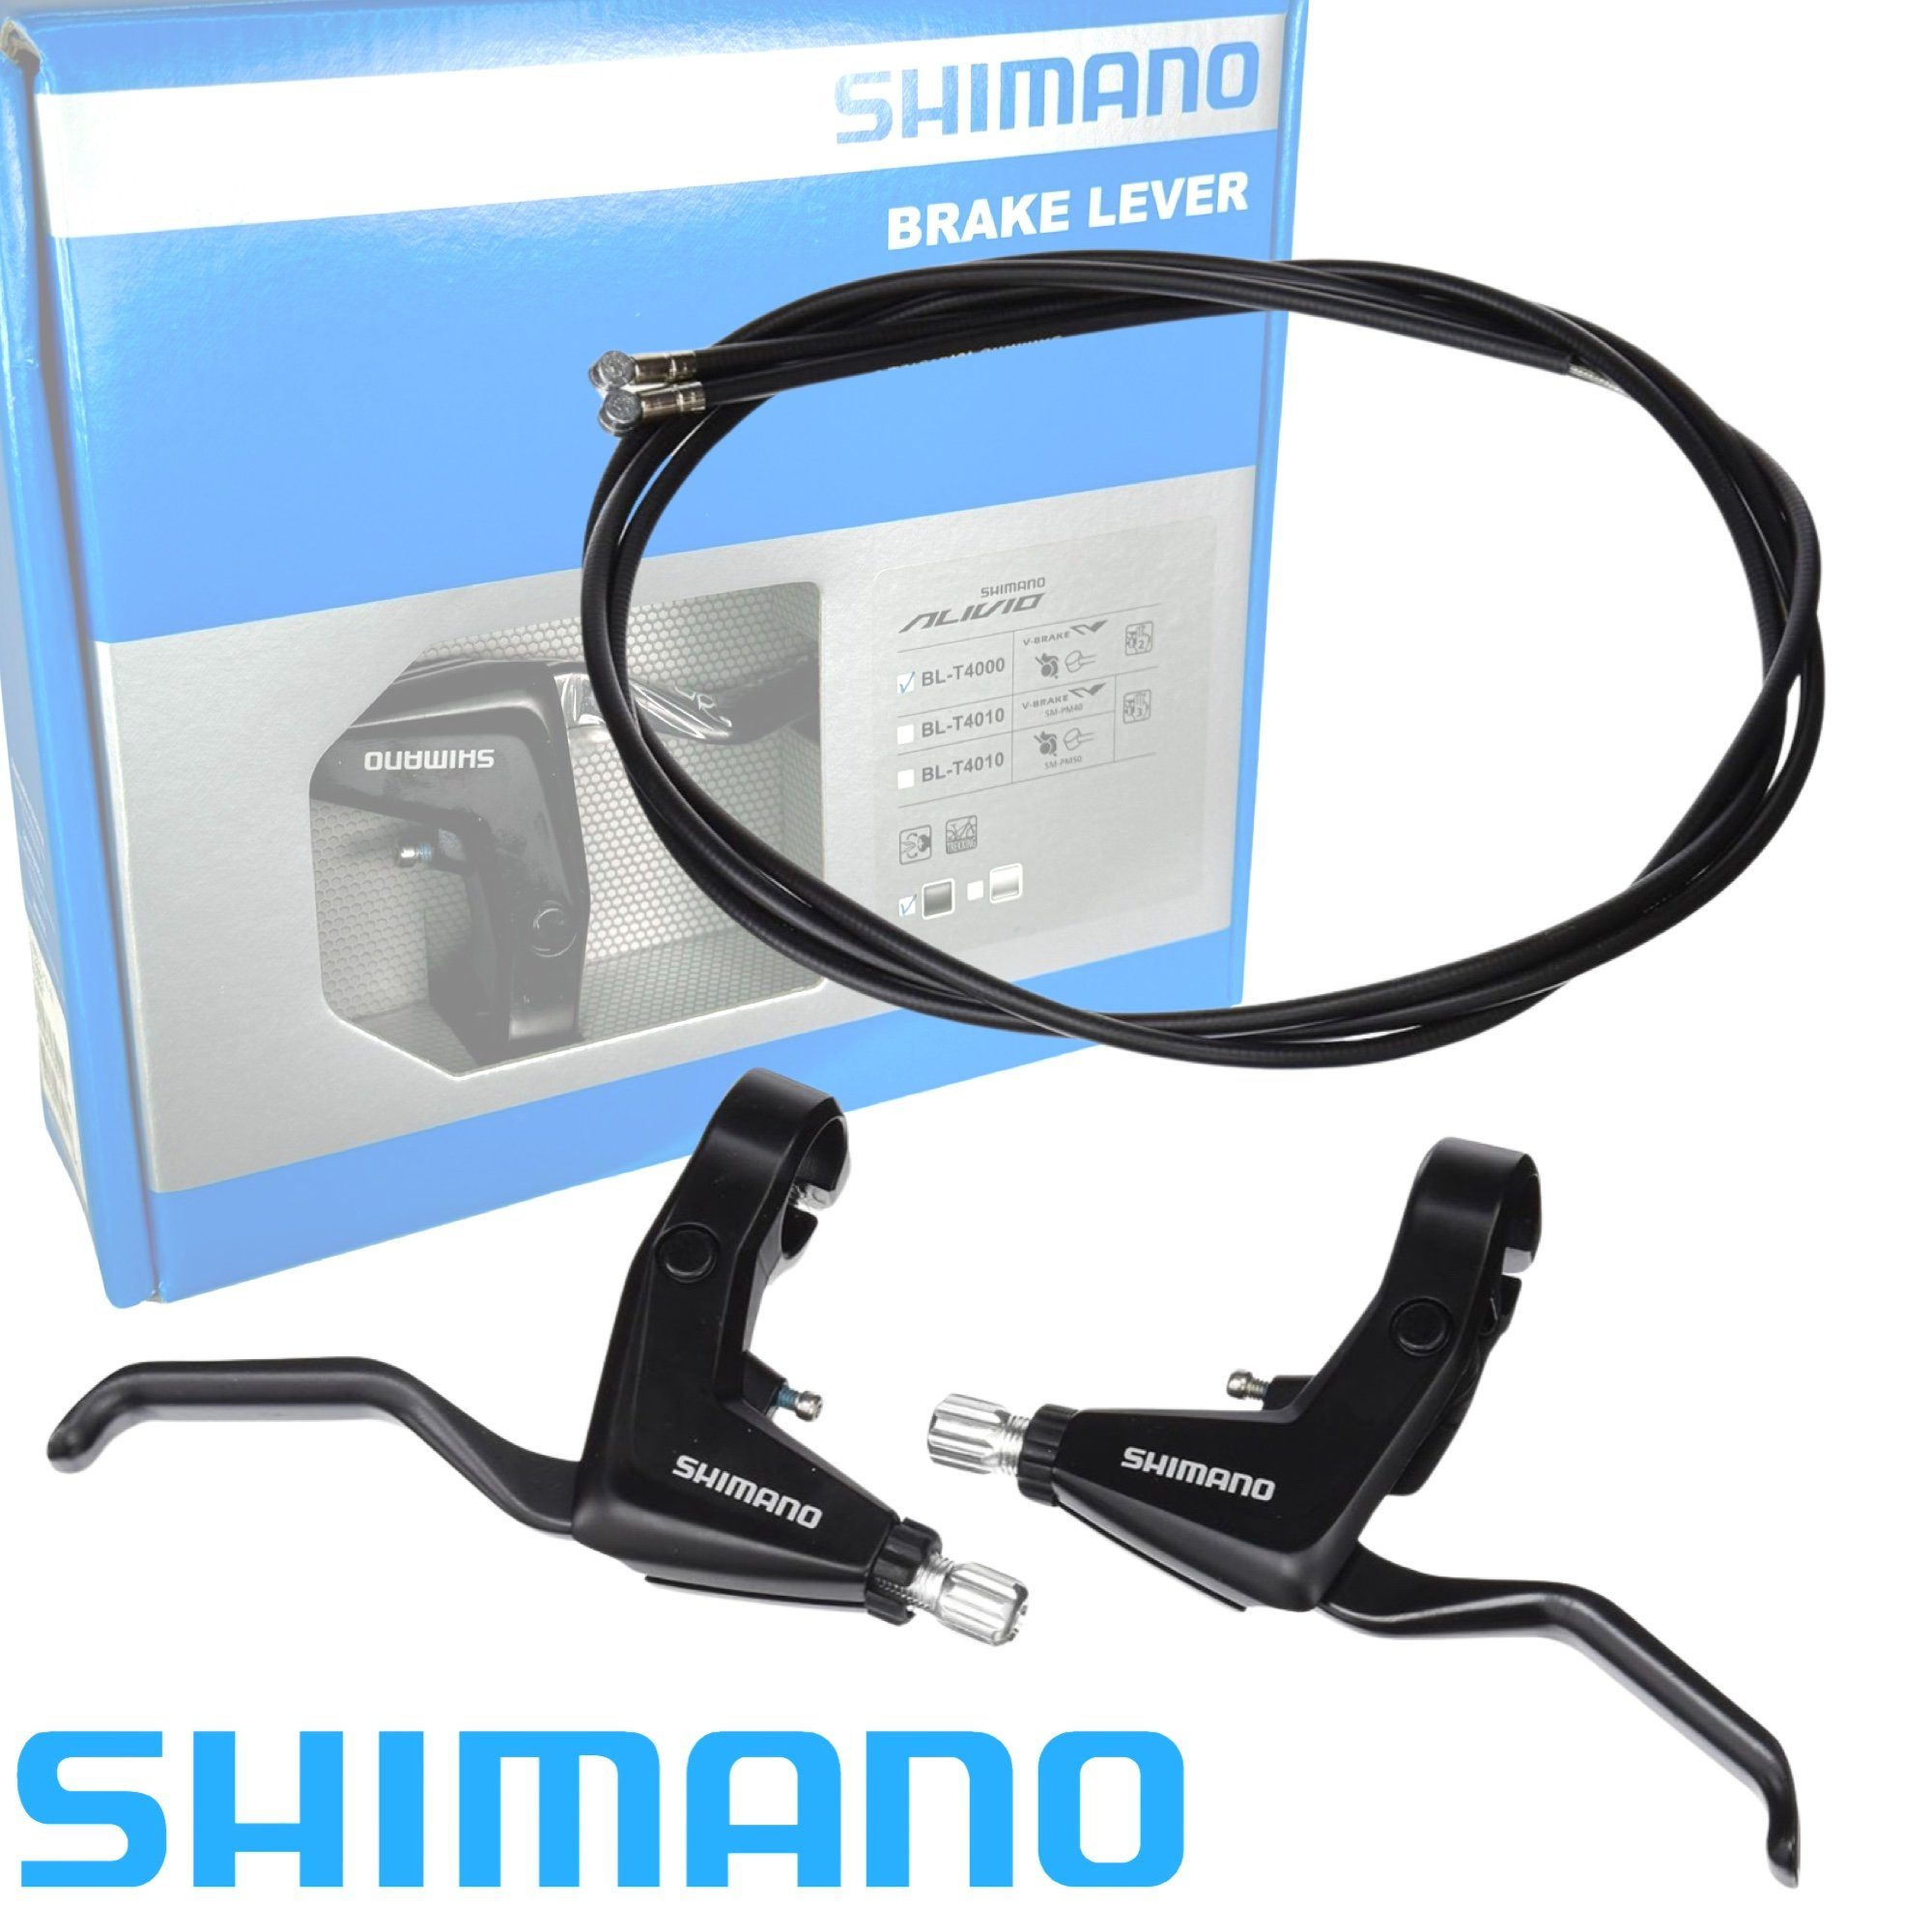 [Neue Produkte sind günstig] Shimano Felgenbremse SHIMANO Fahrrad Bremsgriffe Züge L+R Paar 1 inklusive BL-T4000